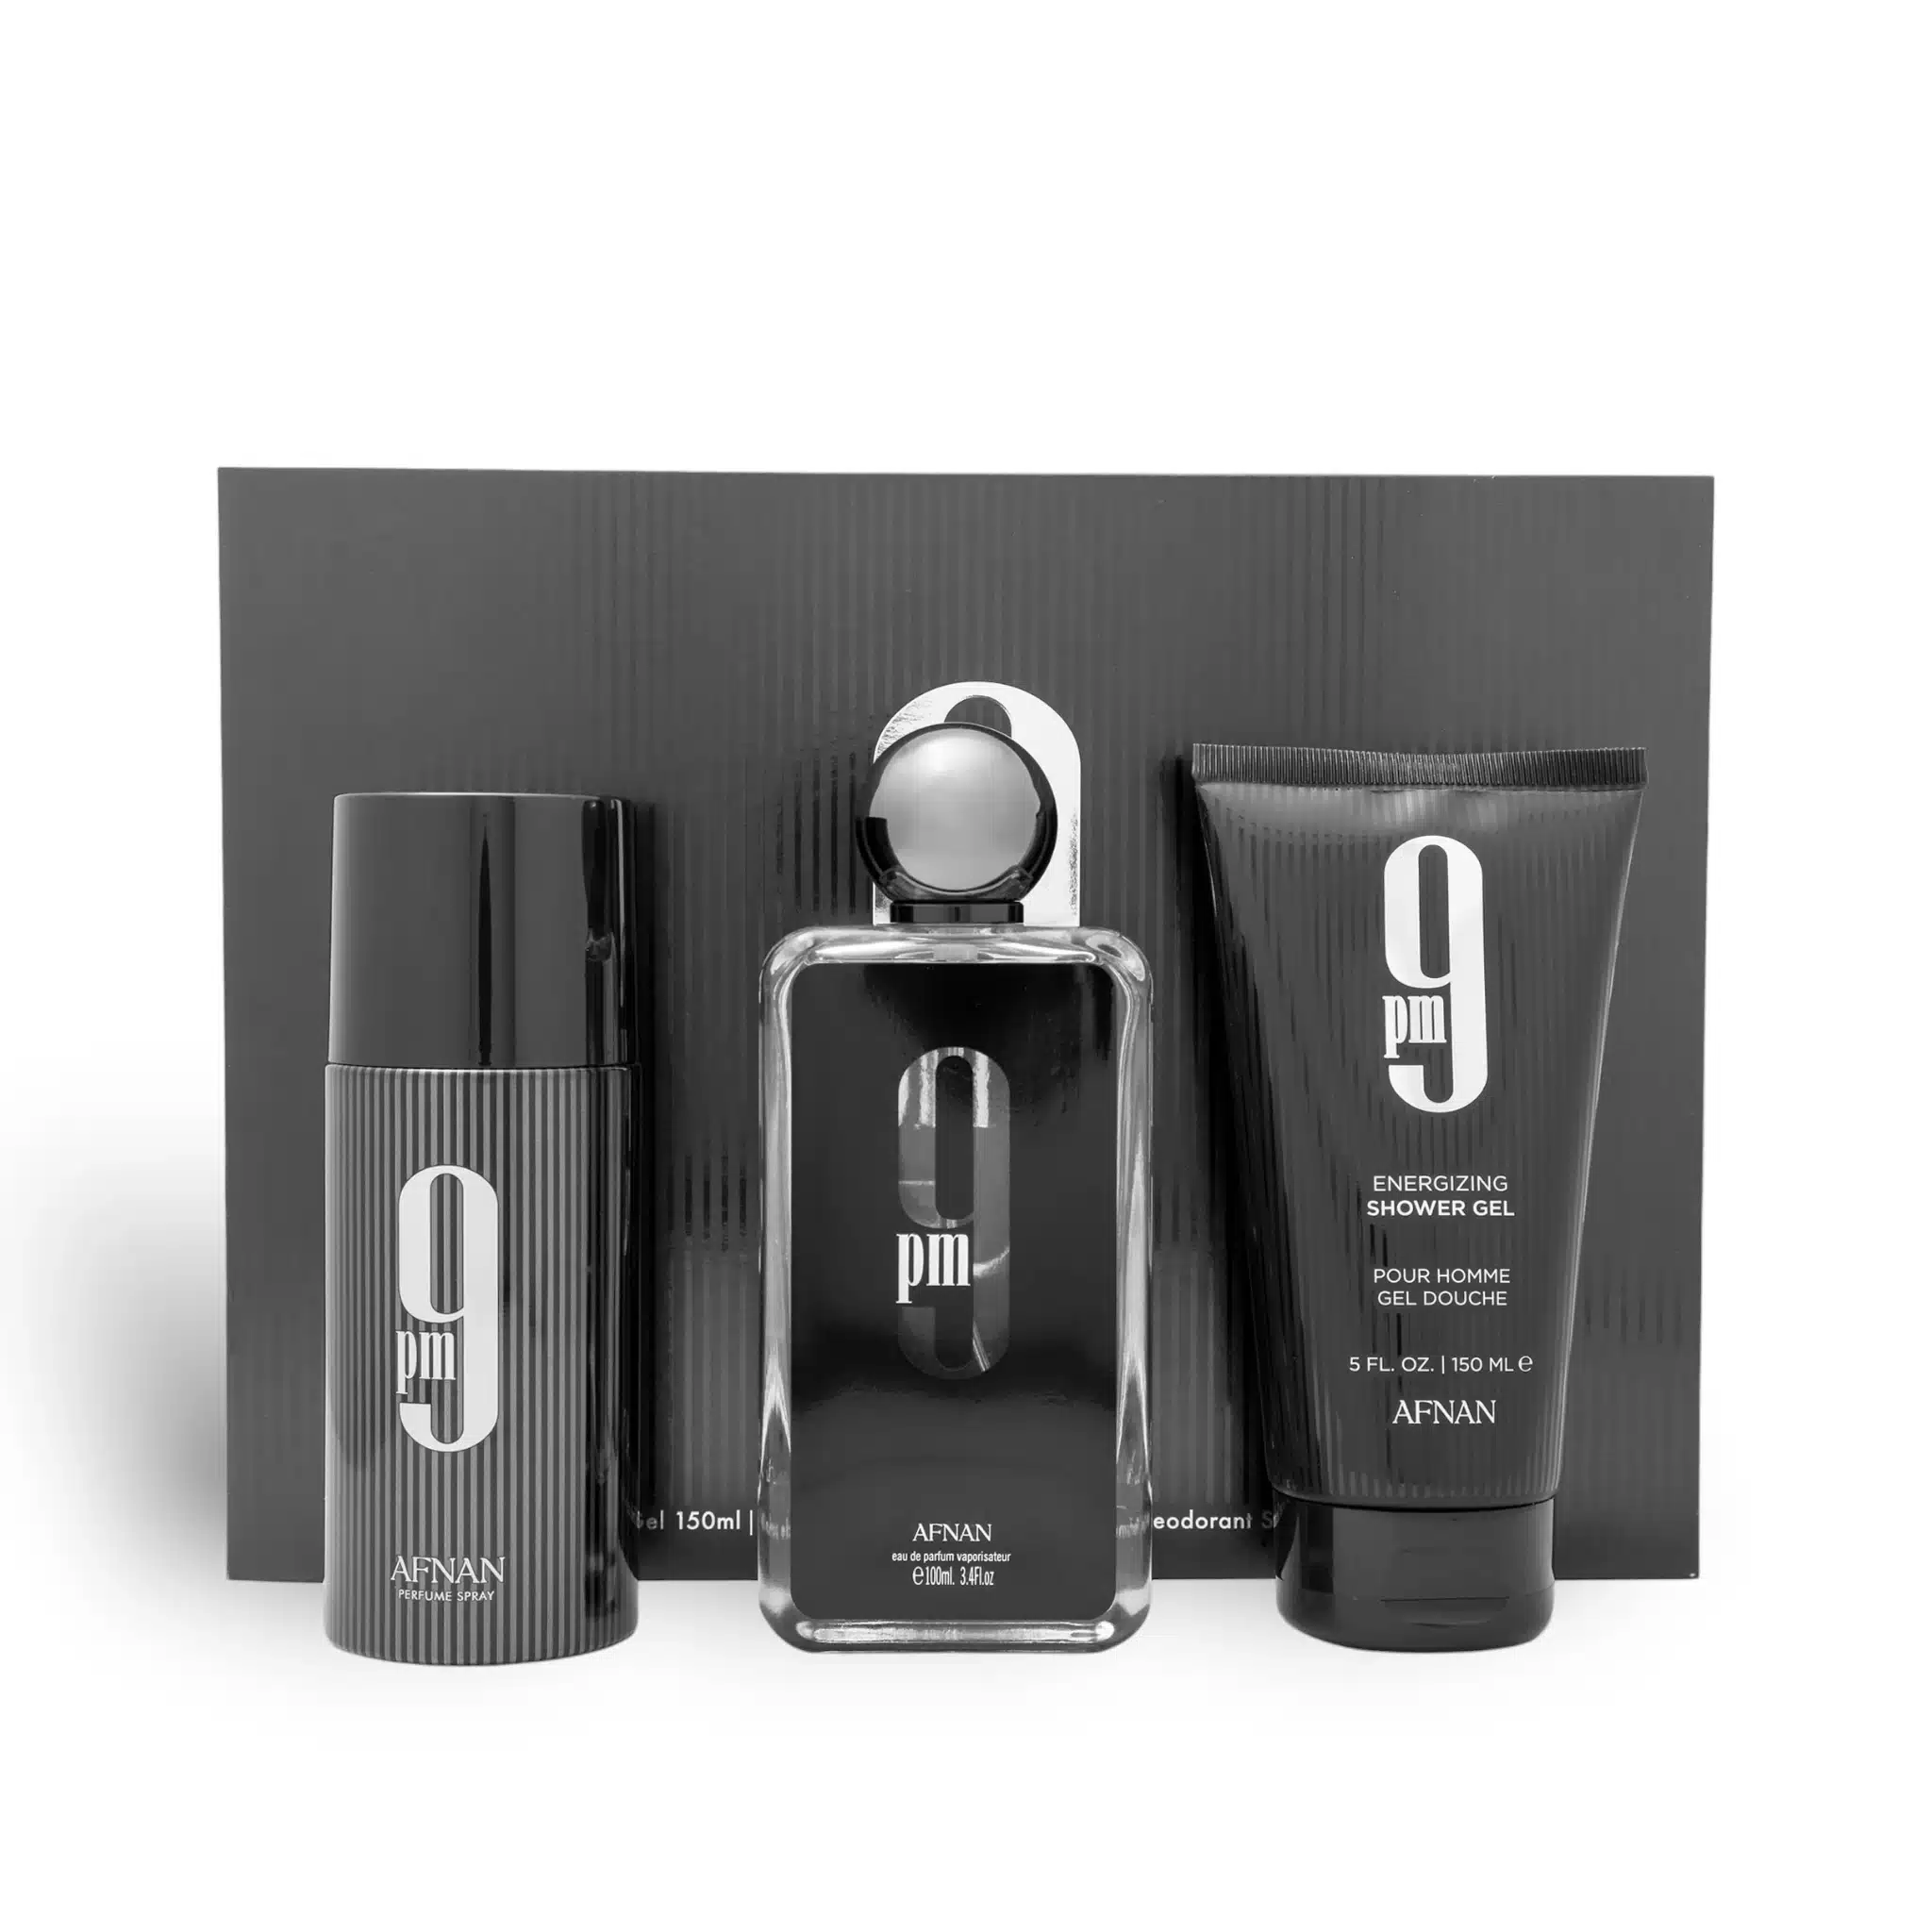 9Pm Perfume Gift Set 100Ml Edp By Afnan